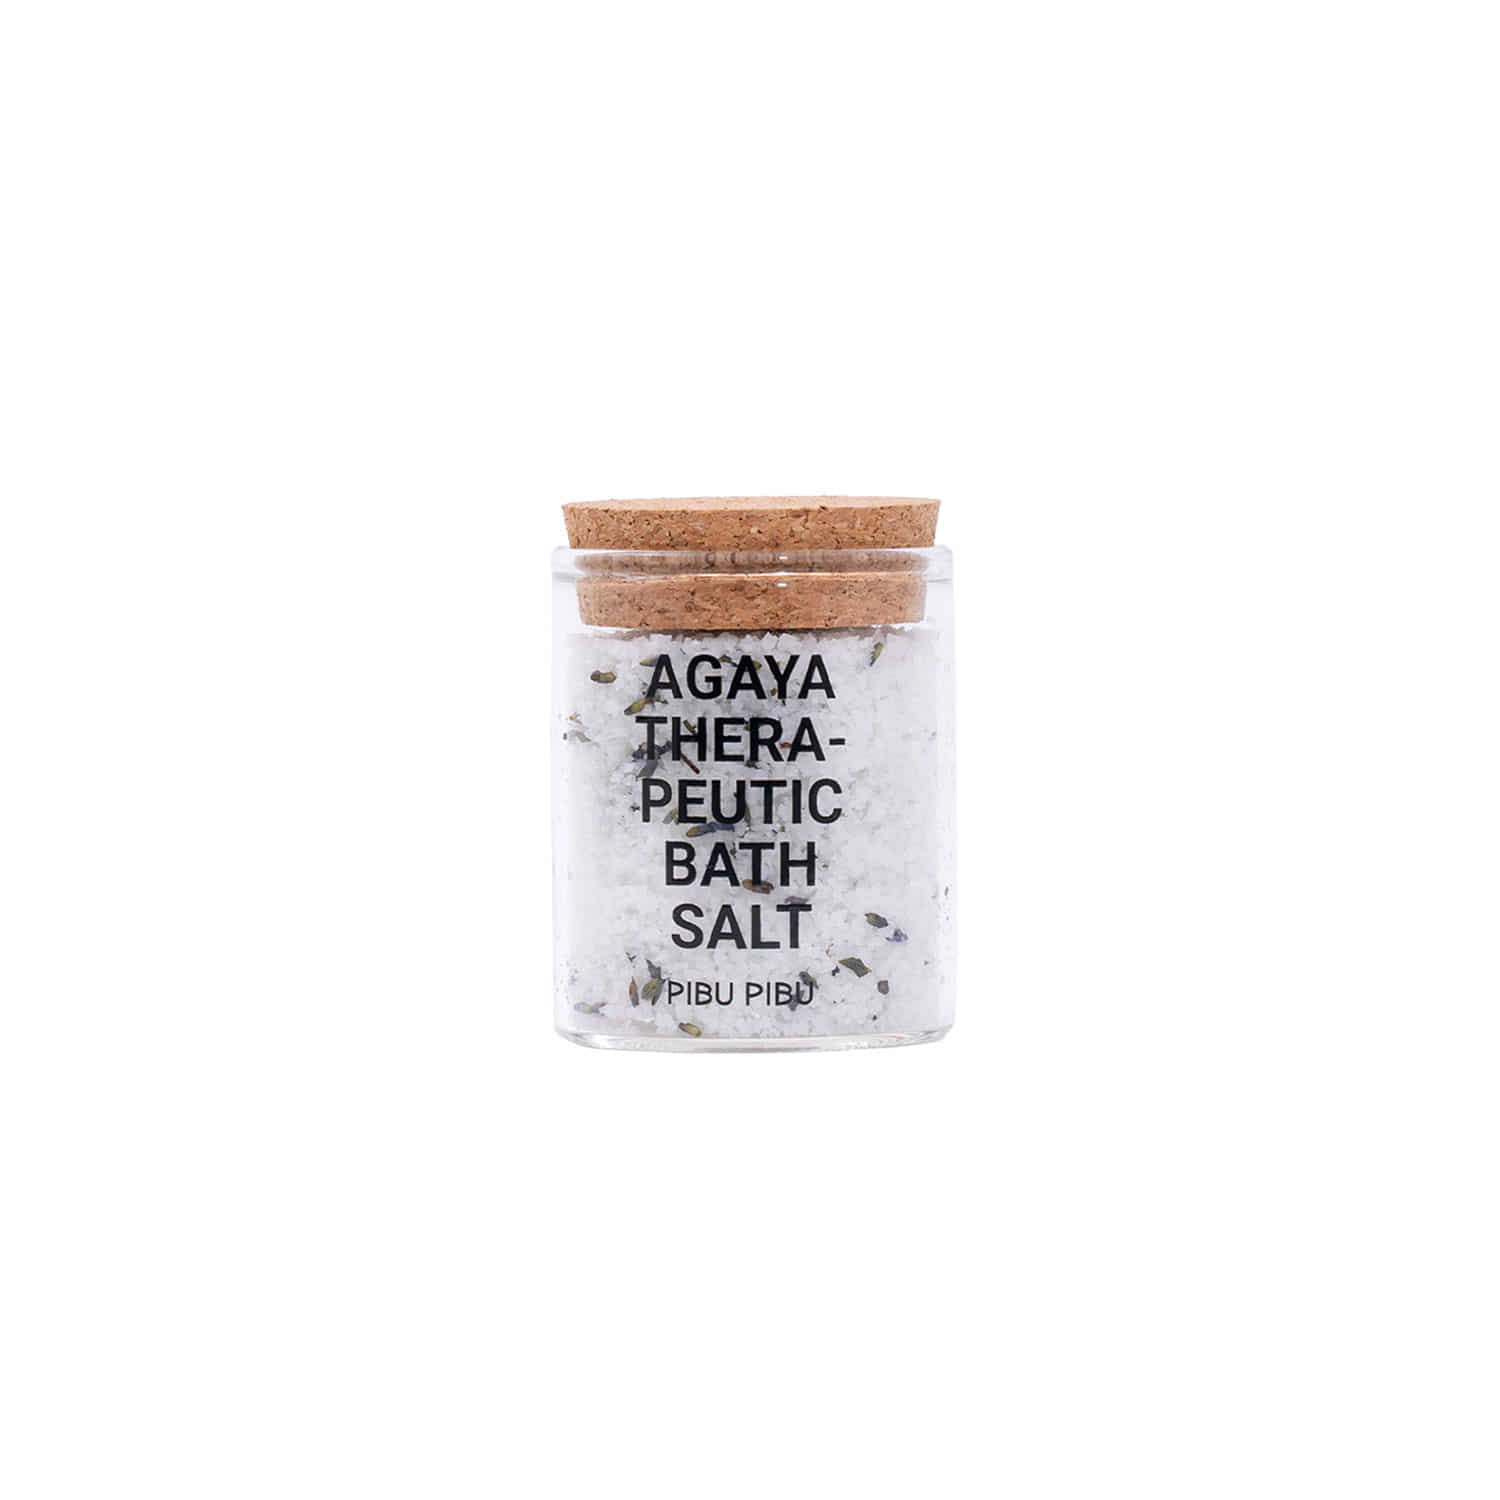 Thera-peutic Bath salt, Agaya baby friendly 130